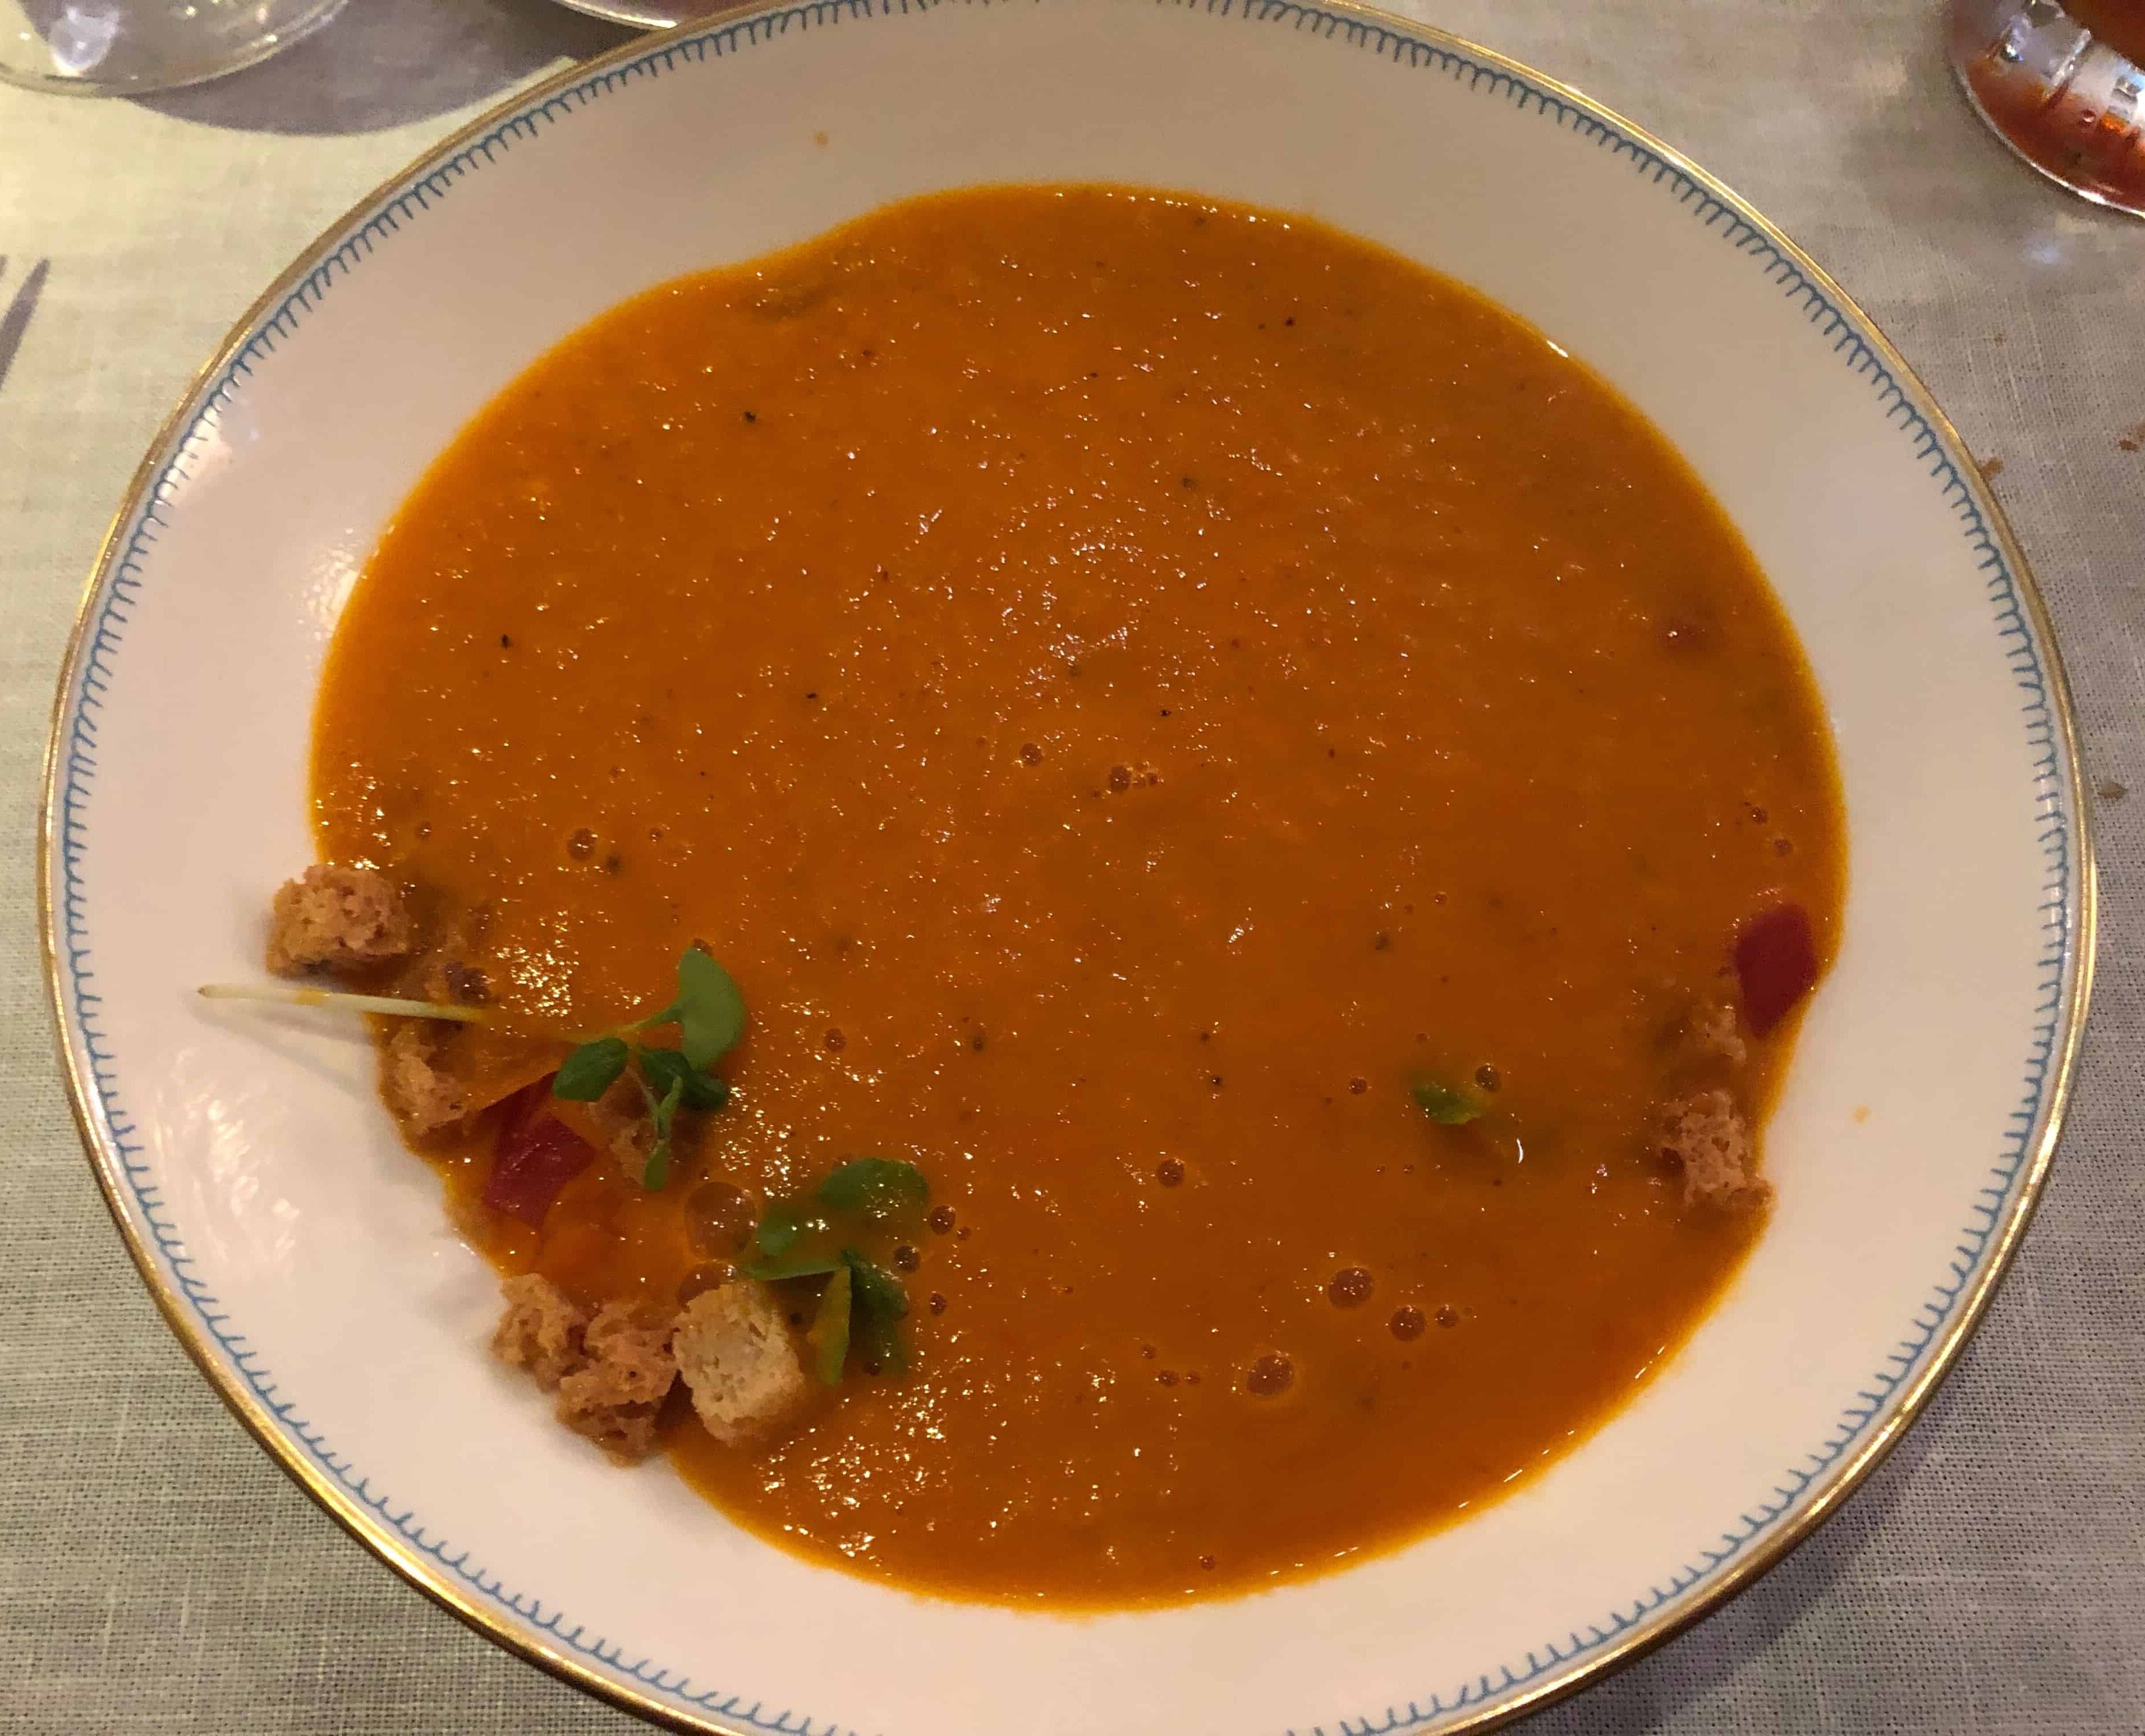 Tomato soup at Ham Yard Bar & Restaurant